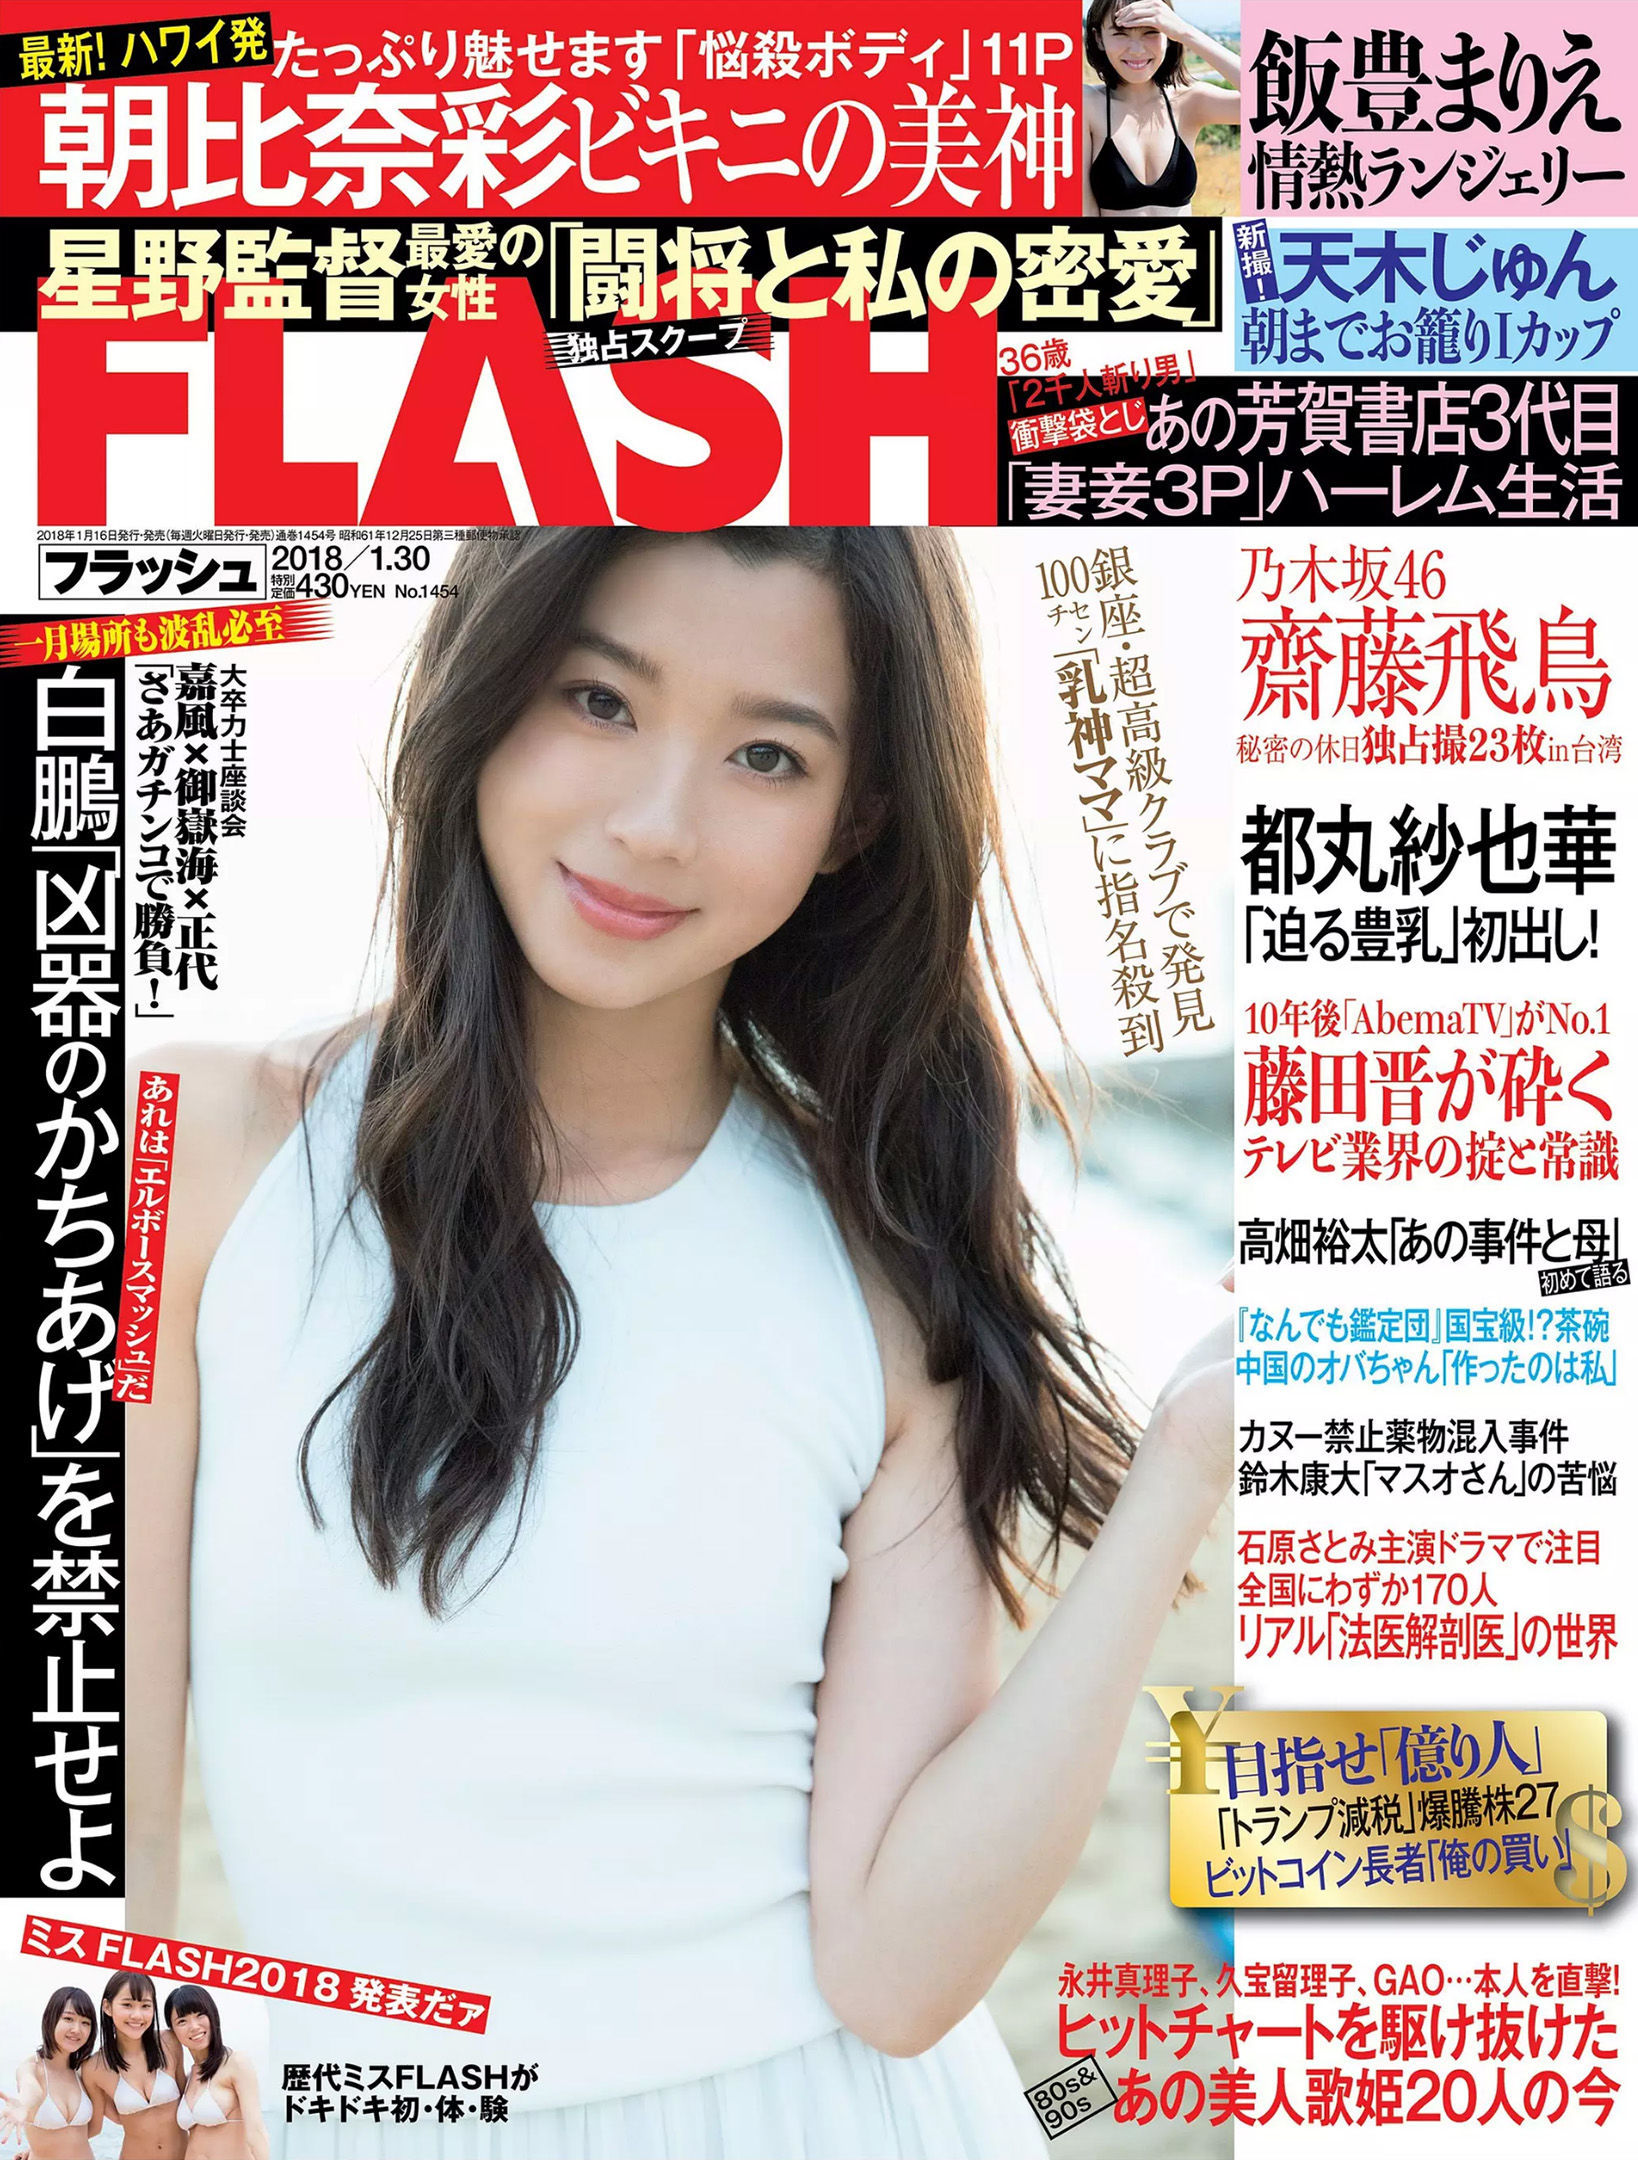 [FLASH]杂志:朝比奈彩无水印写真作品免费在线(24P)